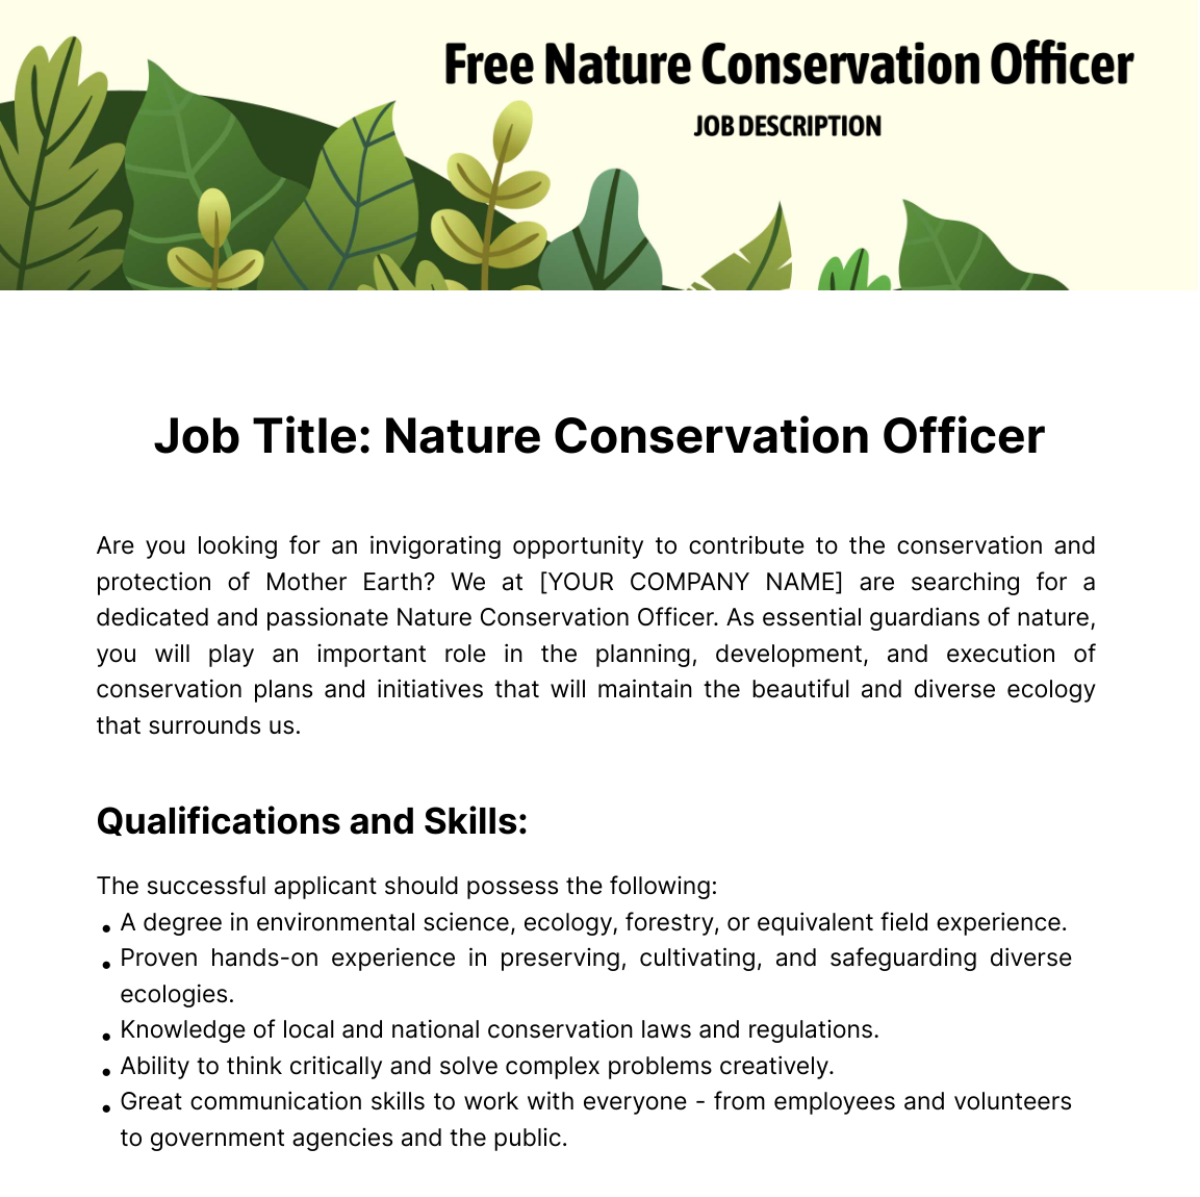 Free Nature Conservation Officer Job Description Template